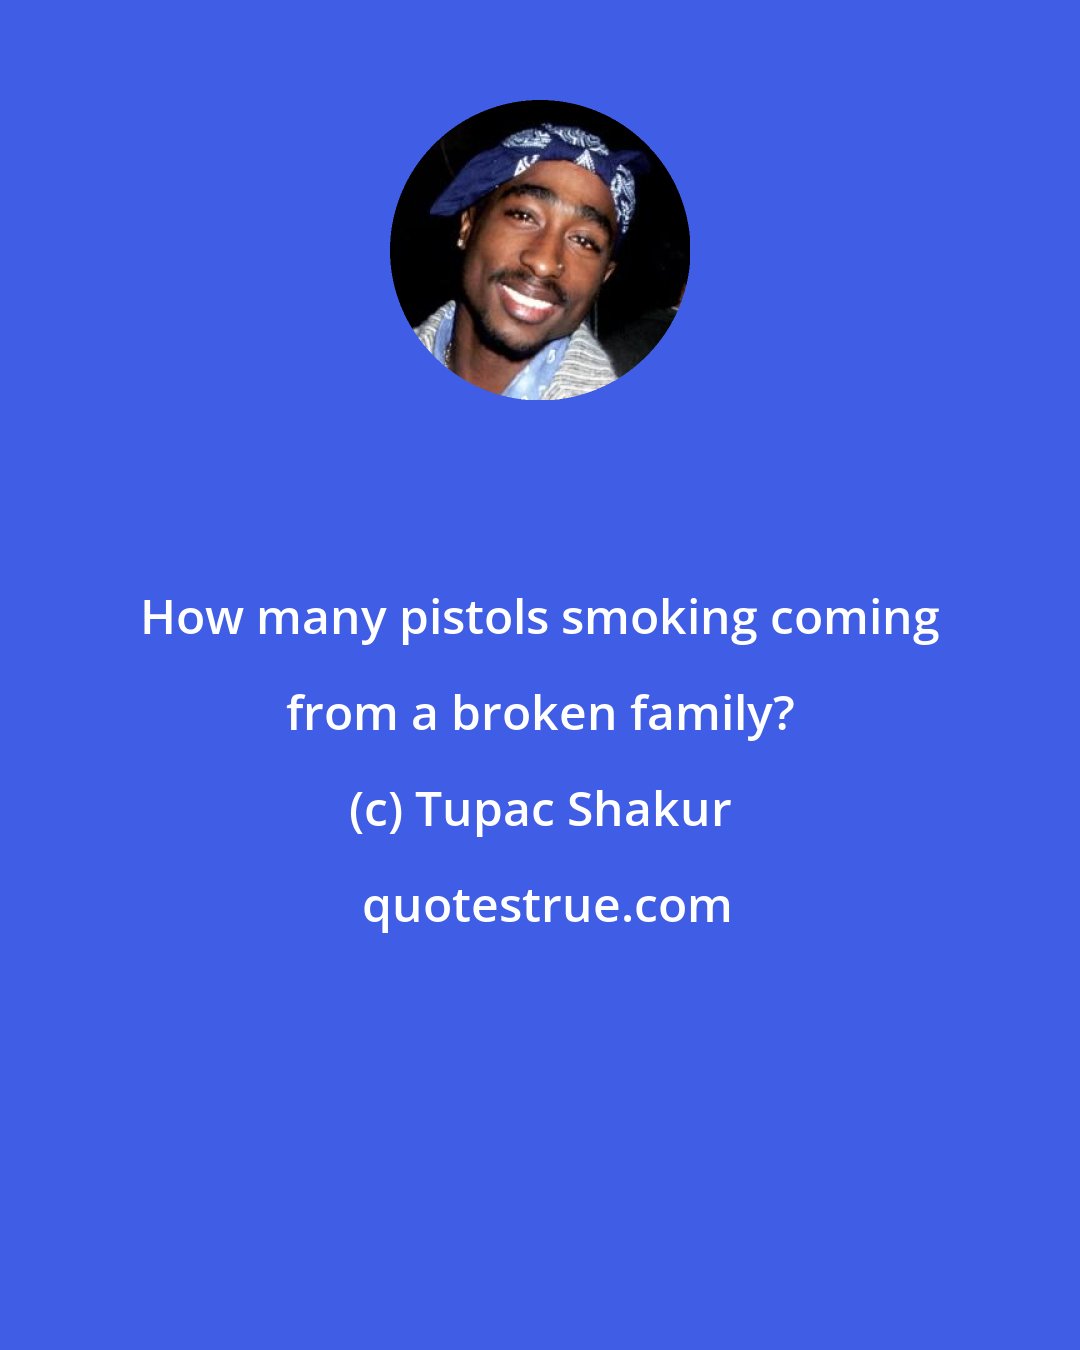 Tupac Shakur: How many pistols smoking coming from a broken family?